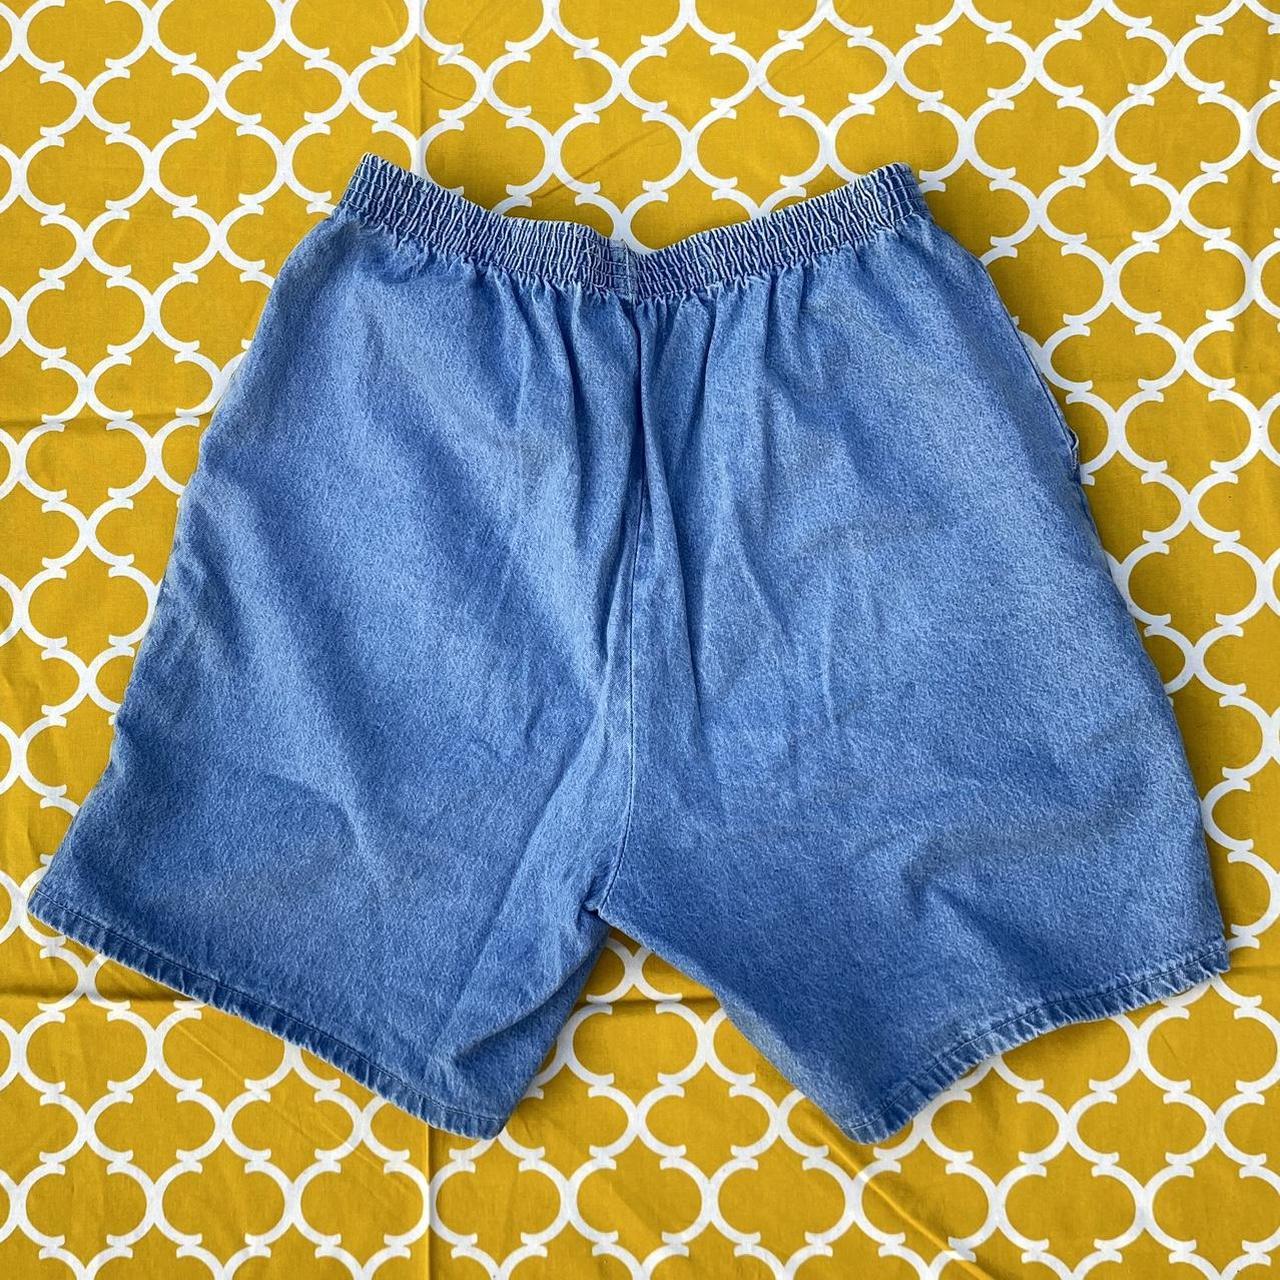 Chic Women's Blue Shorts (8)